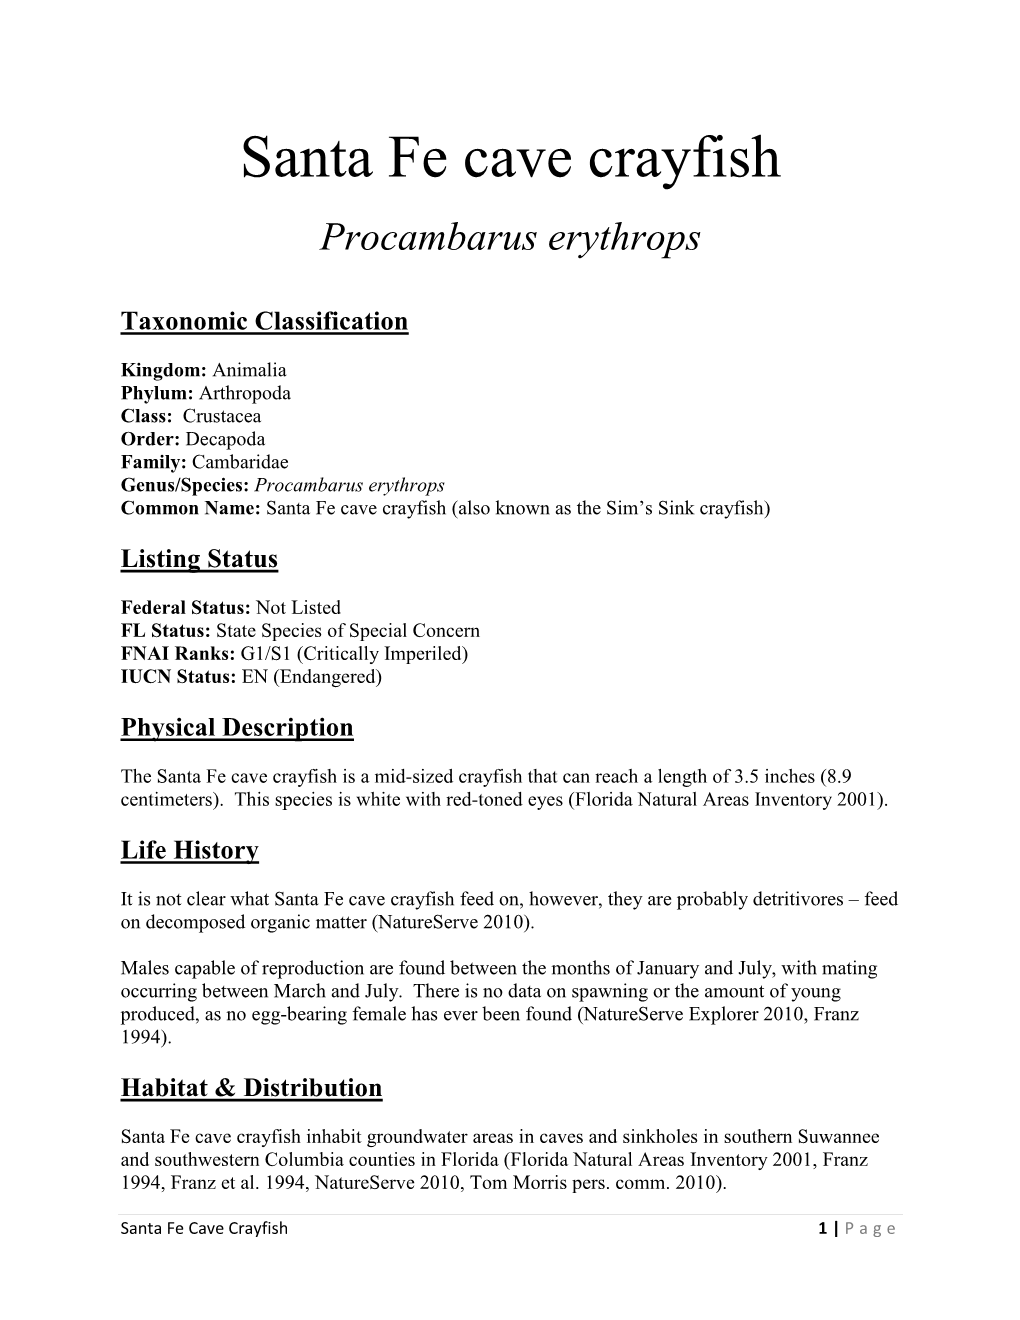 Santa Fe Cave Crayfish